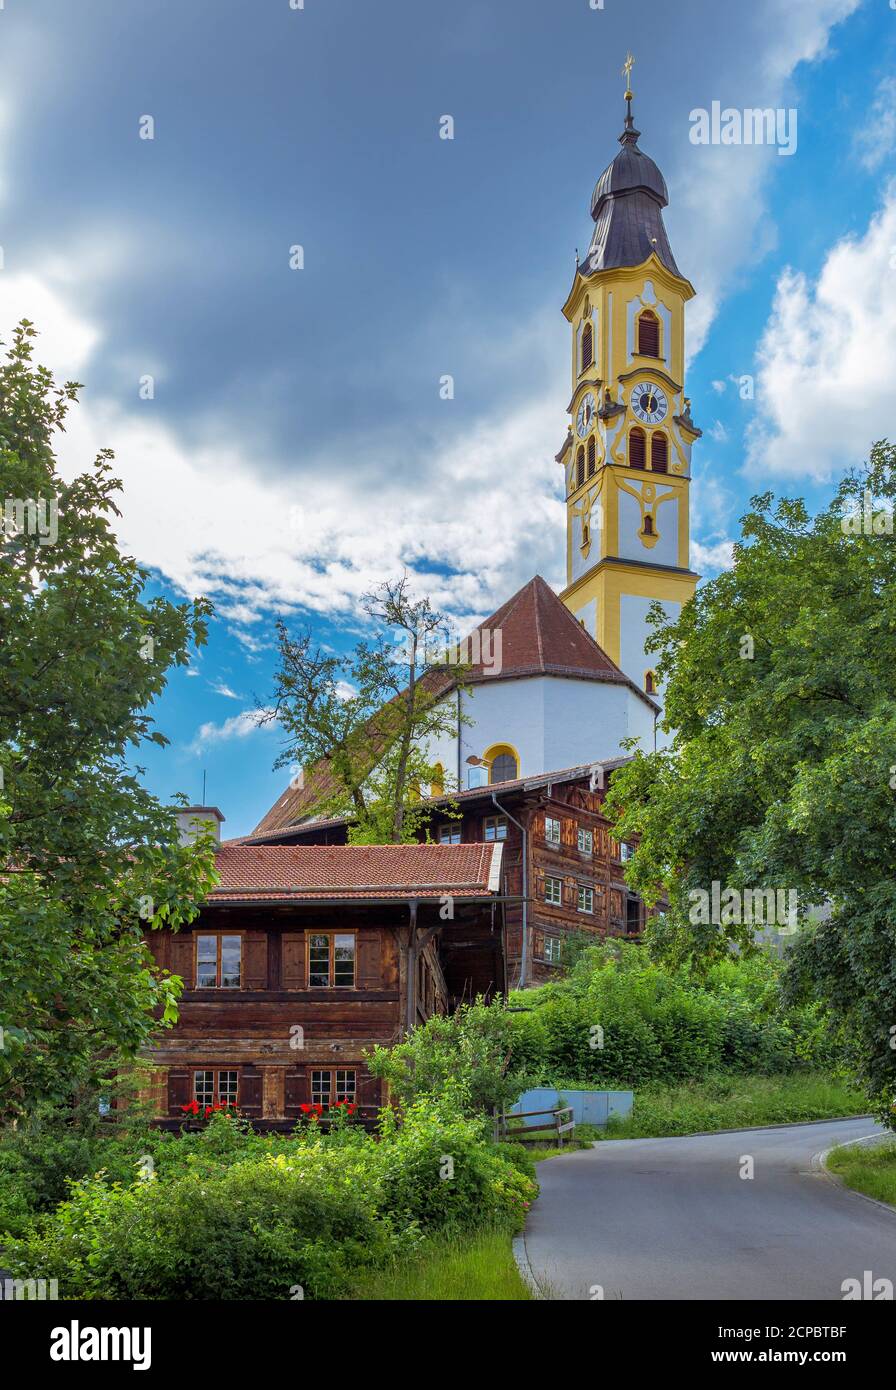 Parish Church of St. Nicholas and old wooden farmhouses, Pfronten, Ostallgäu, Allgäu, Bavaria, Germany, Europe Stock Photo